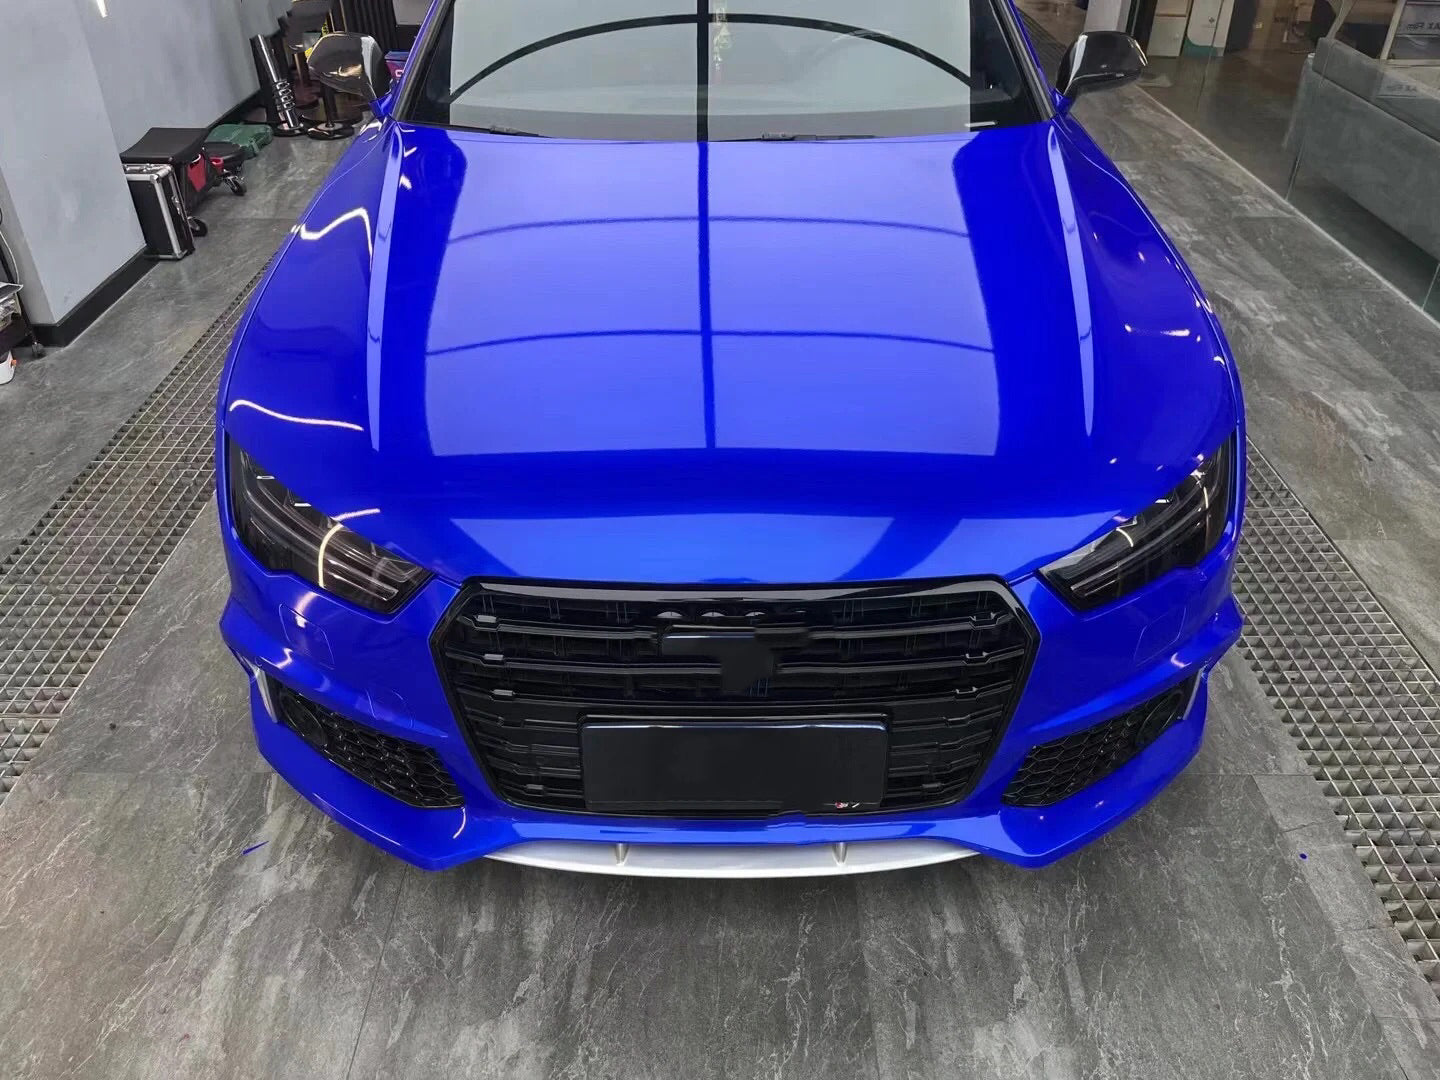 Gloss Metallic Midnight Blue Car Wrap